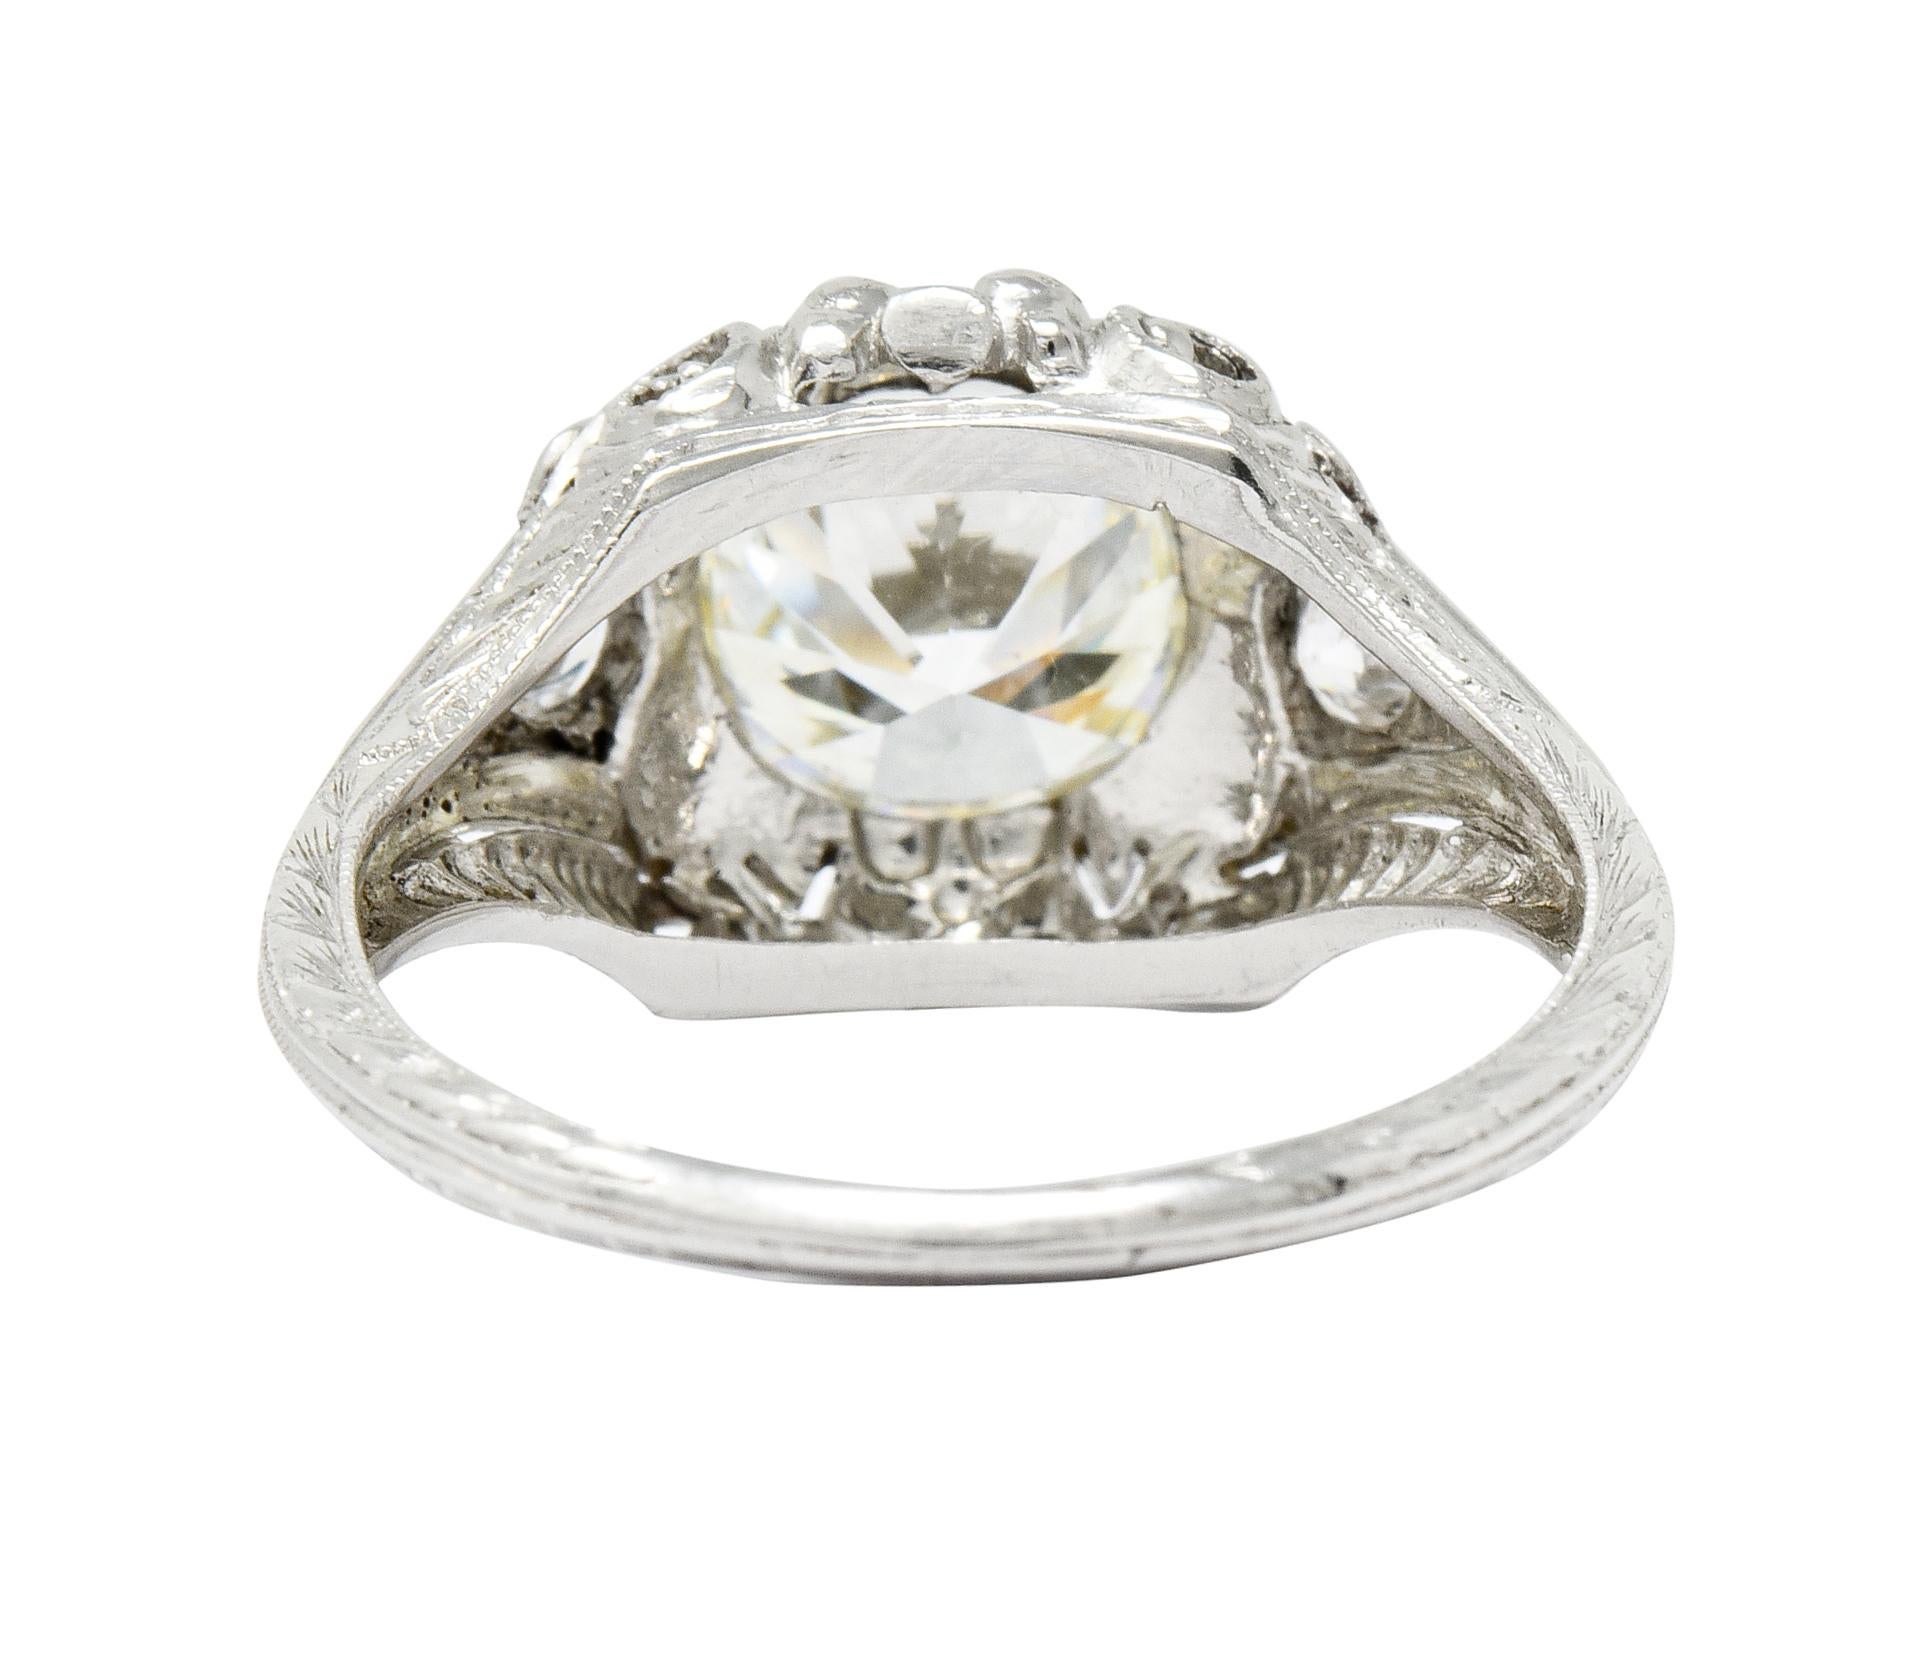 Old European Cut Art Deco Ornate 2.09 Carat Diamond Platinum Floral Engagement Ring